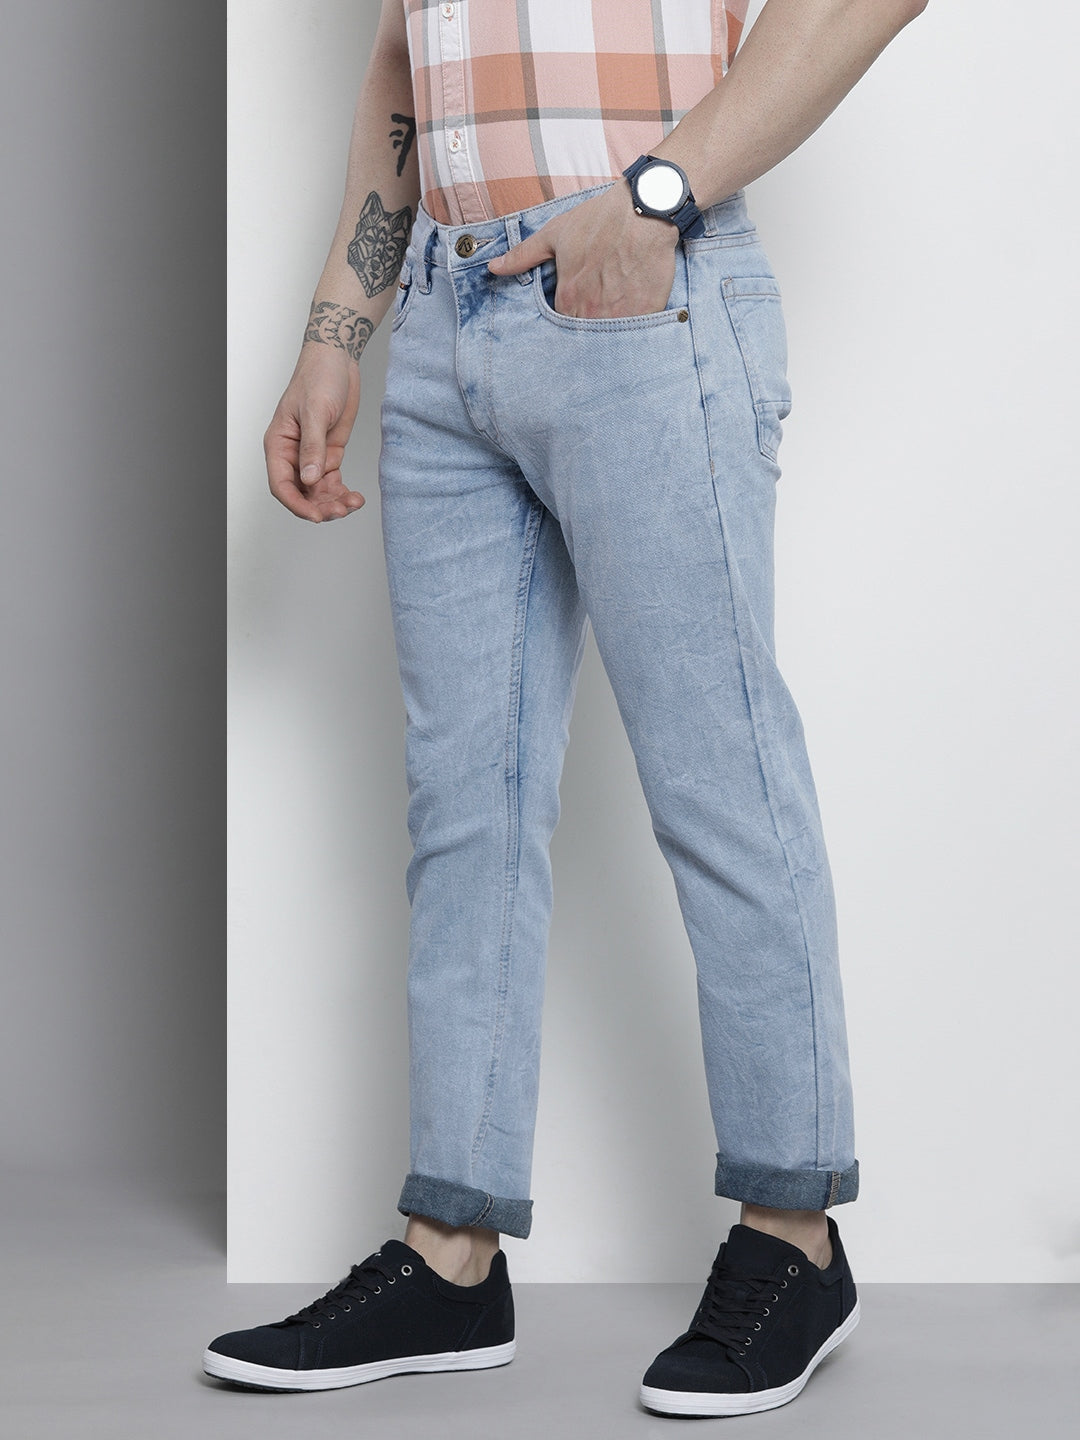 Shop Men Distressed Straight Jeans Online.